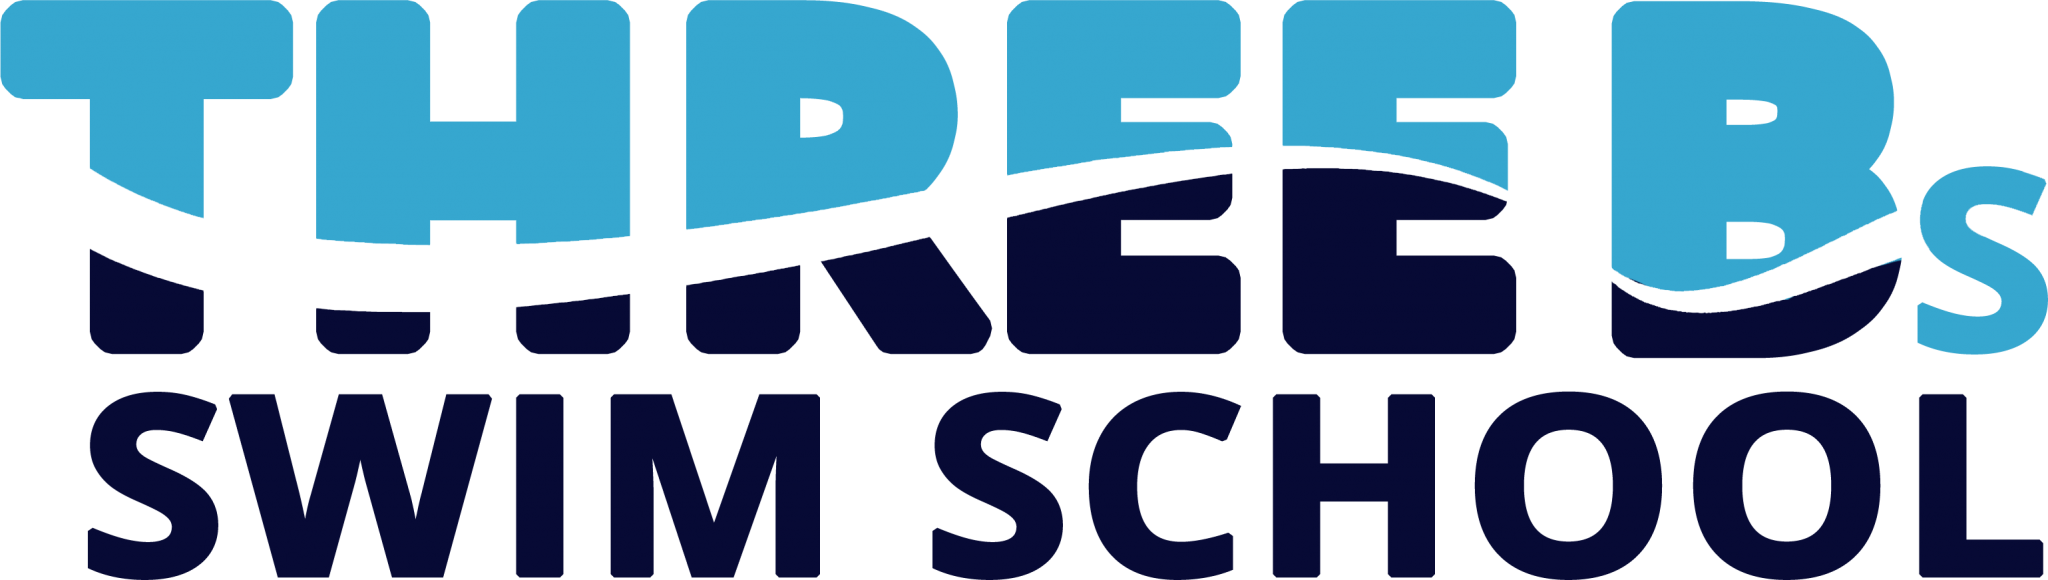 Three Bs Swimschool logo